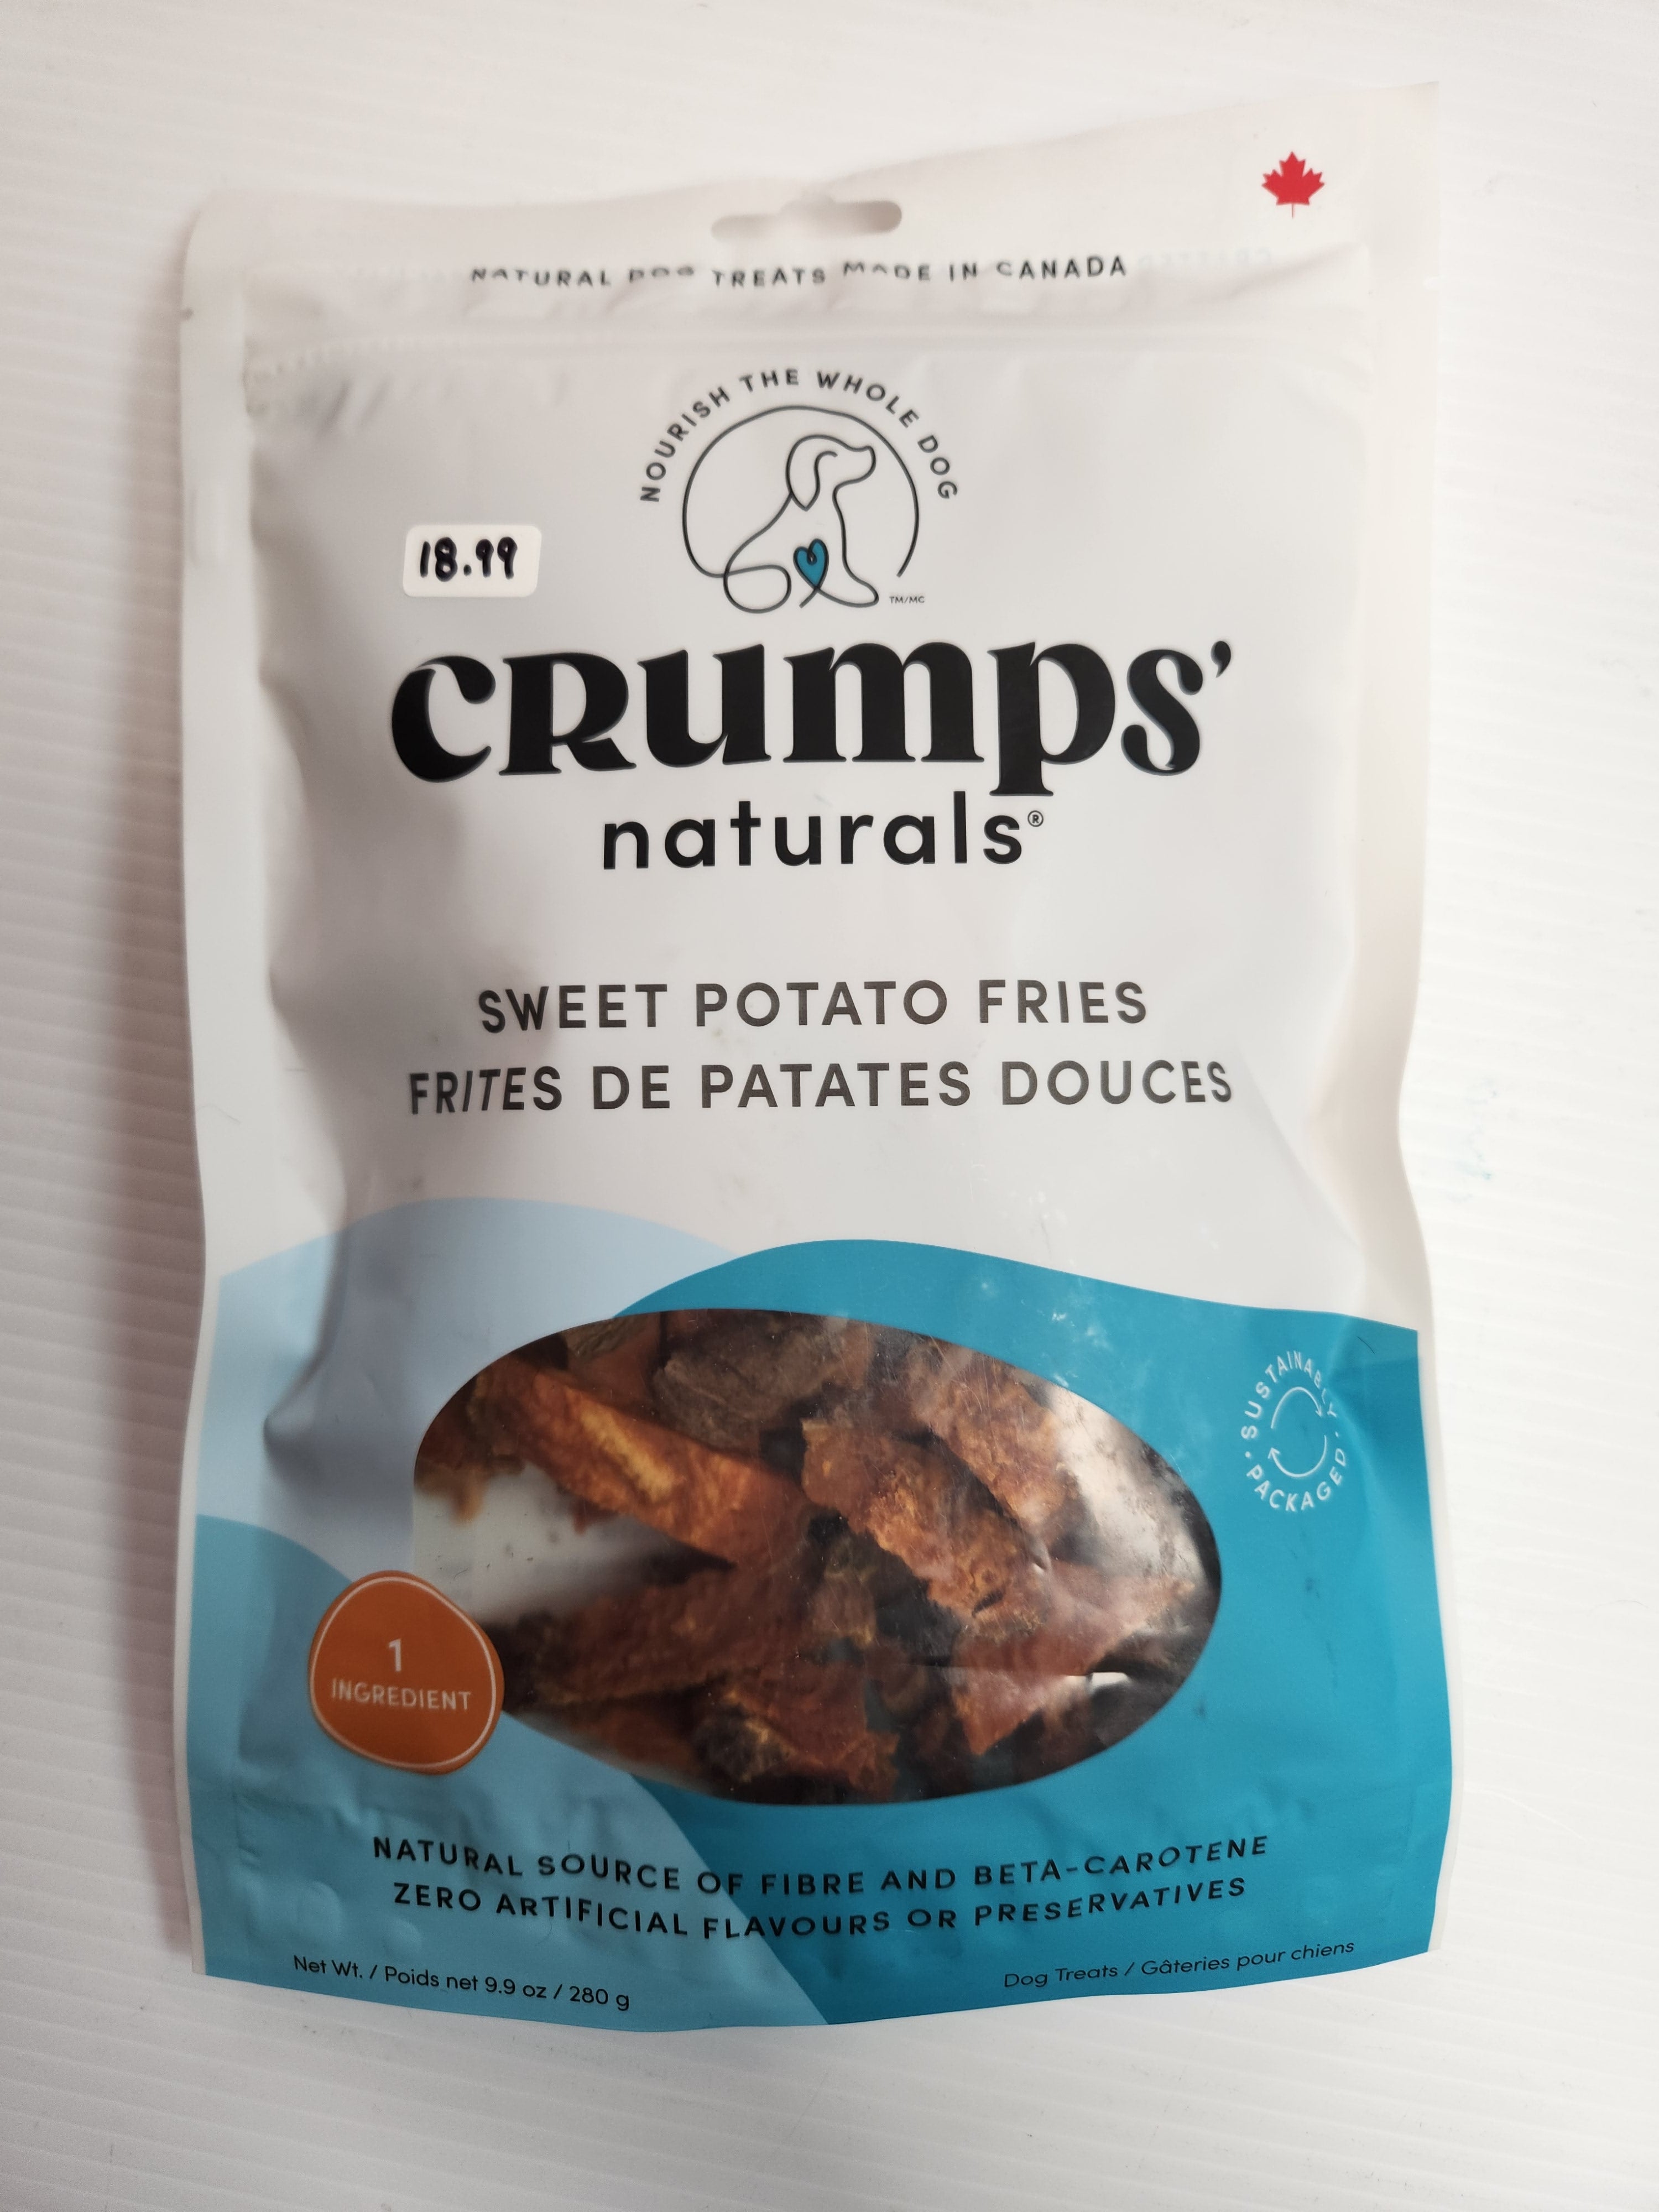 Crumps Naturals, Sweet Potato Fries, 1 Ingredient, 280g